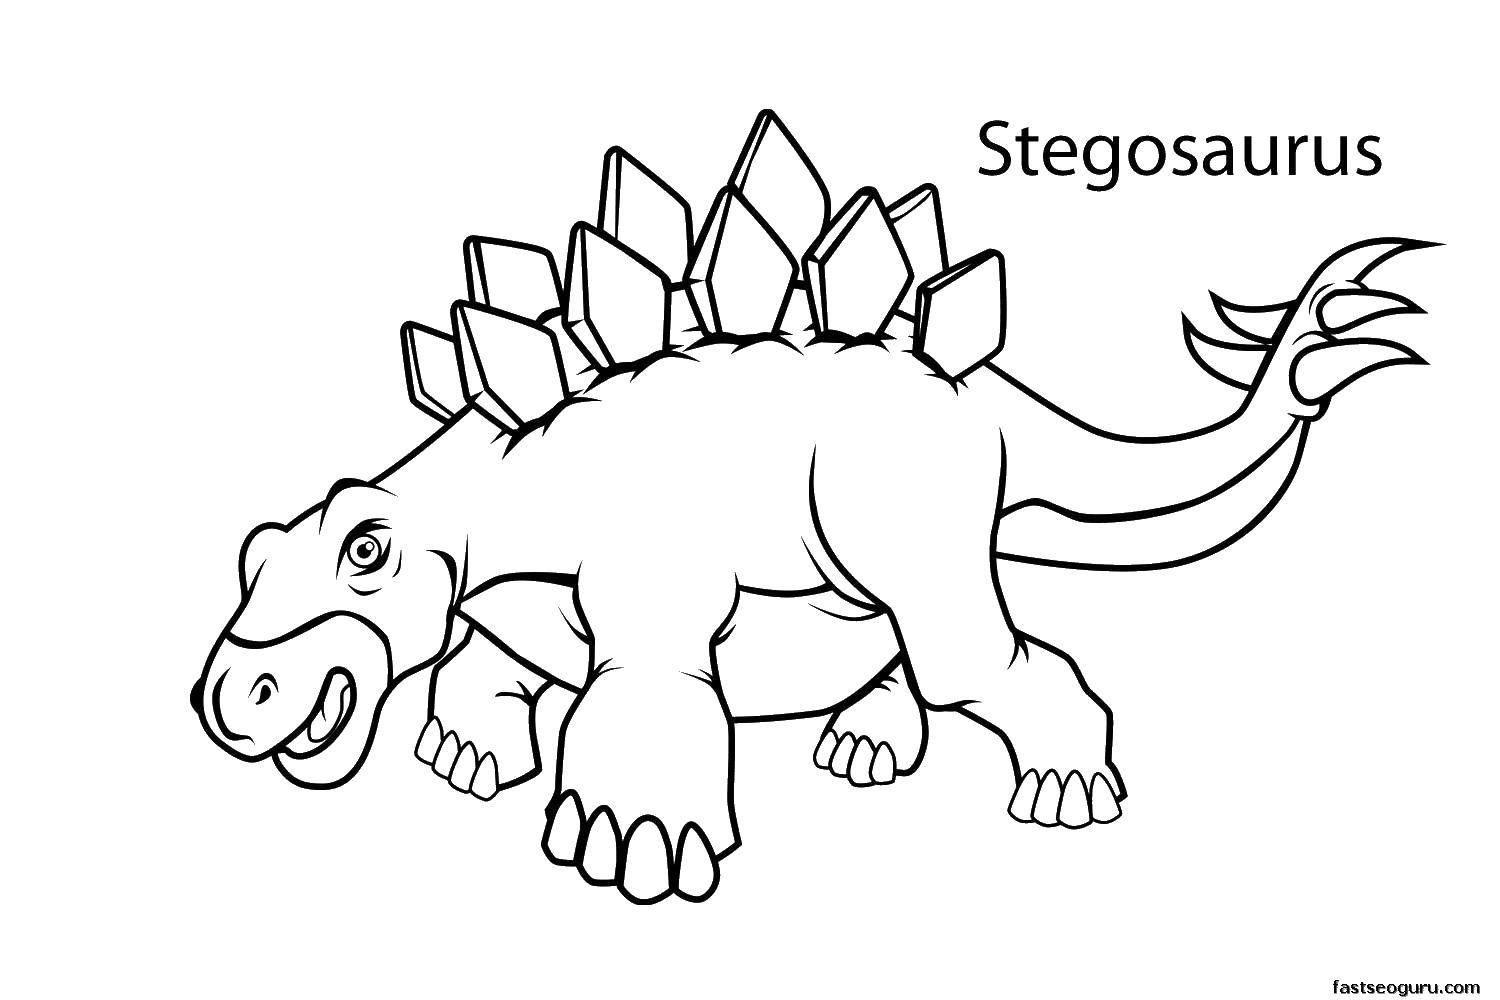 Название: Раскраска Стегозавр. Категория: парк юрского периода. Теги: парк юрского периода, динозавры, снегозавр.